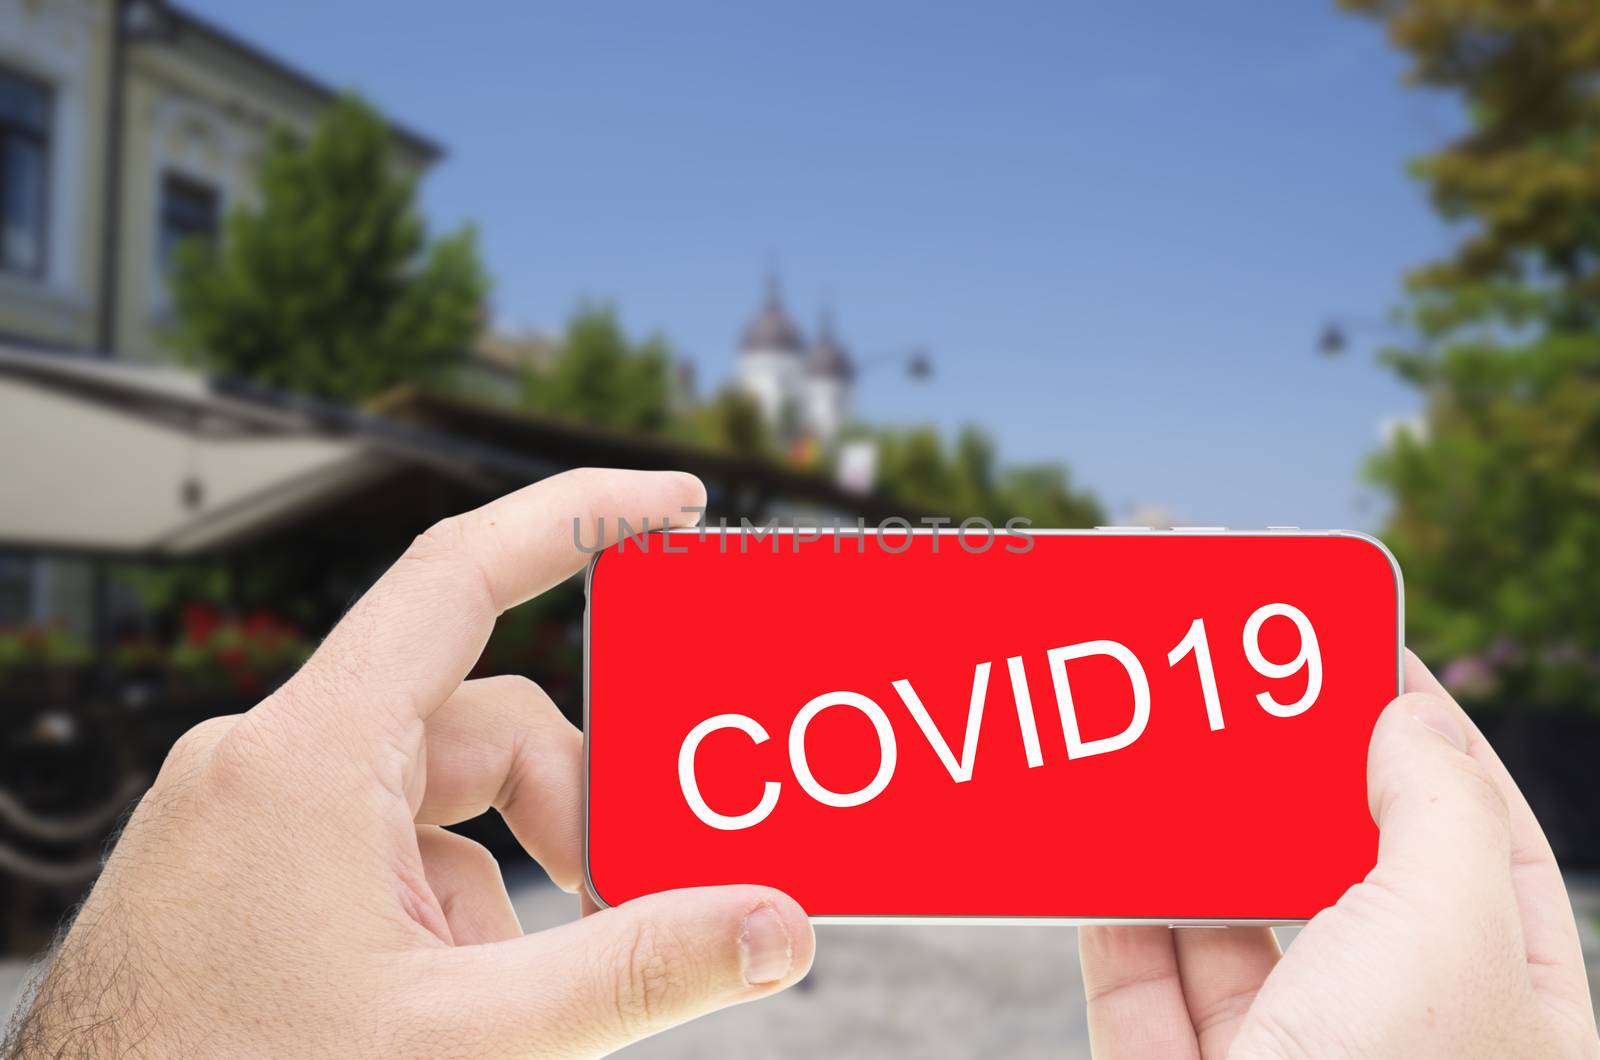 Covid19 on smartscreen display by savcoco